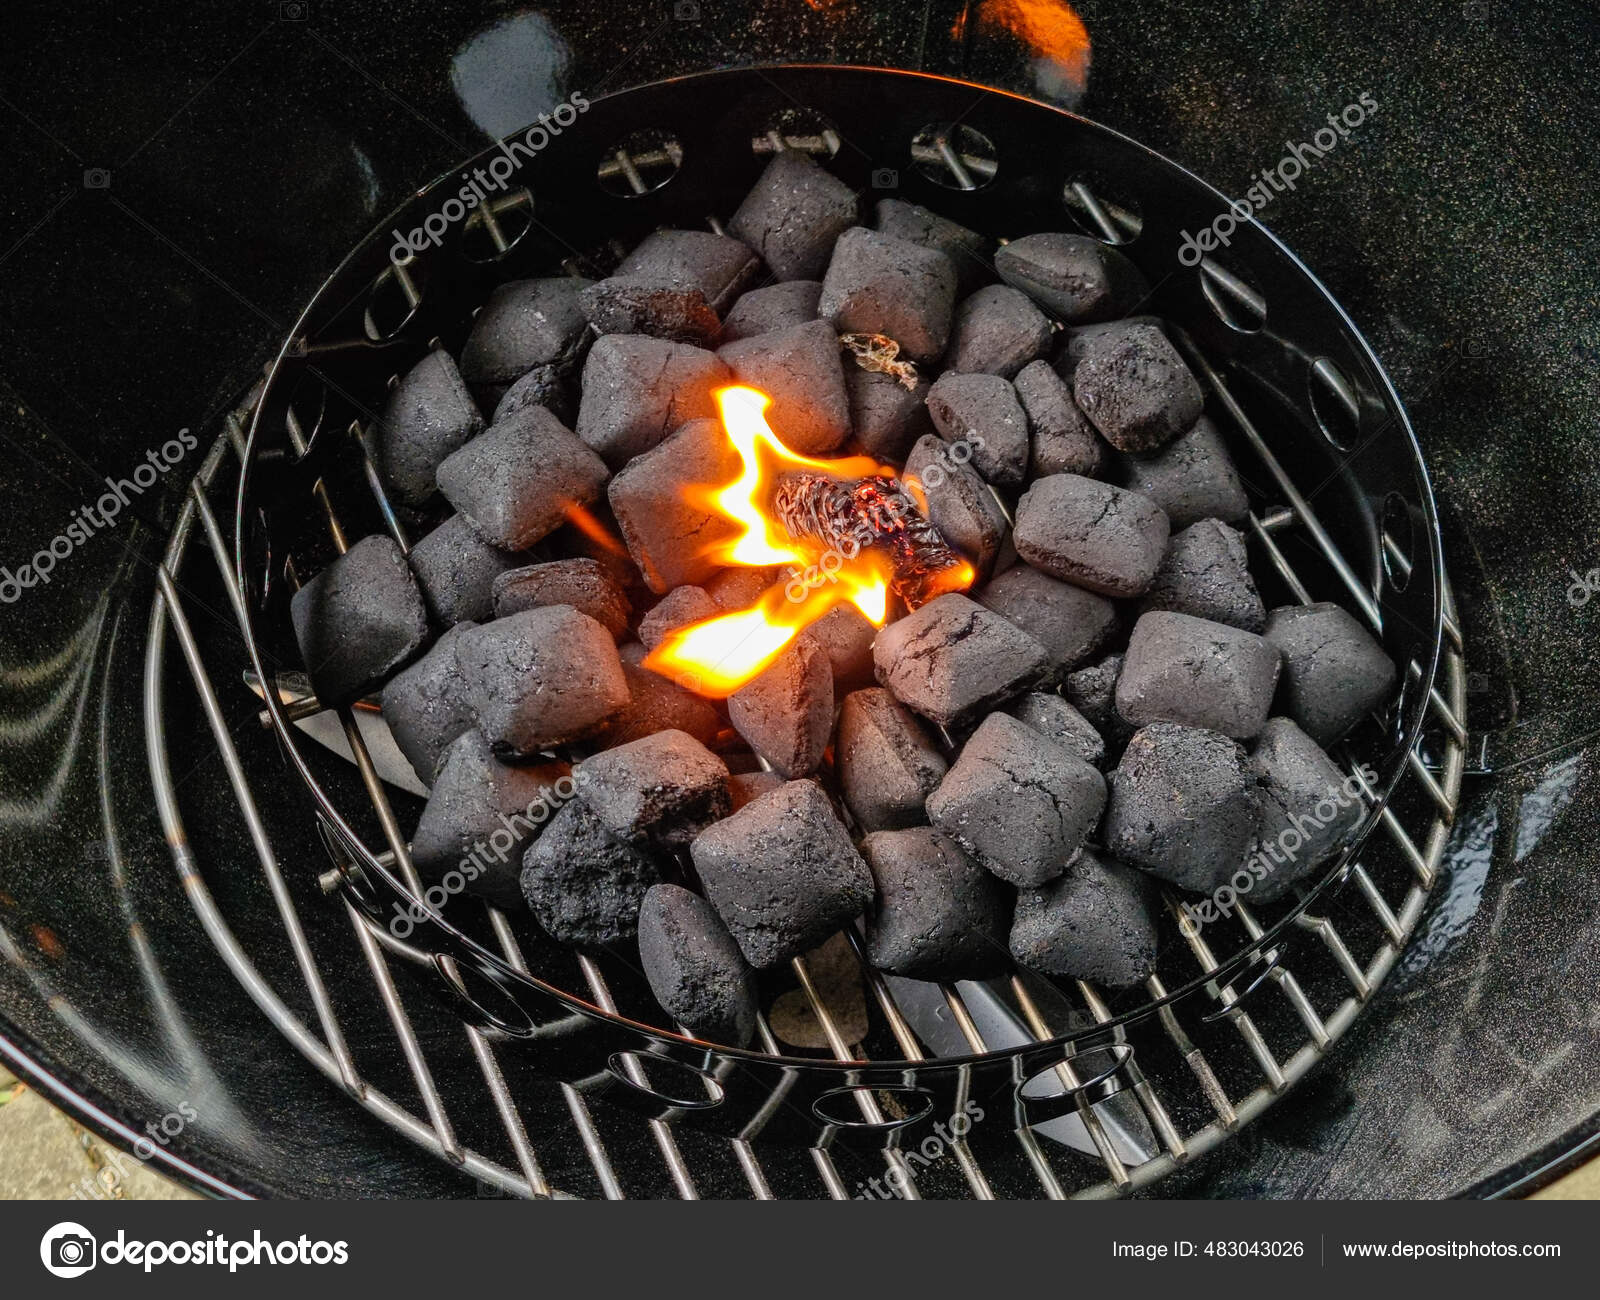 https://st2.depositphotos.com/21942940/48304/i/1600/depositphotos_483043026-stock-photo-burning-barbecue-lighter-charcoal-briquettes.jpg